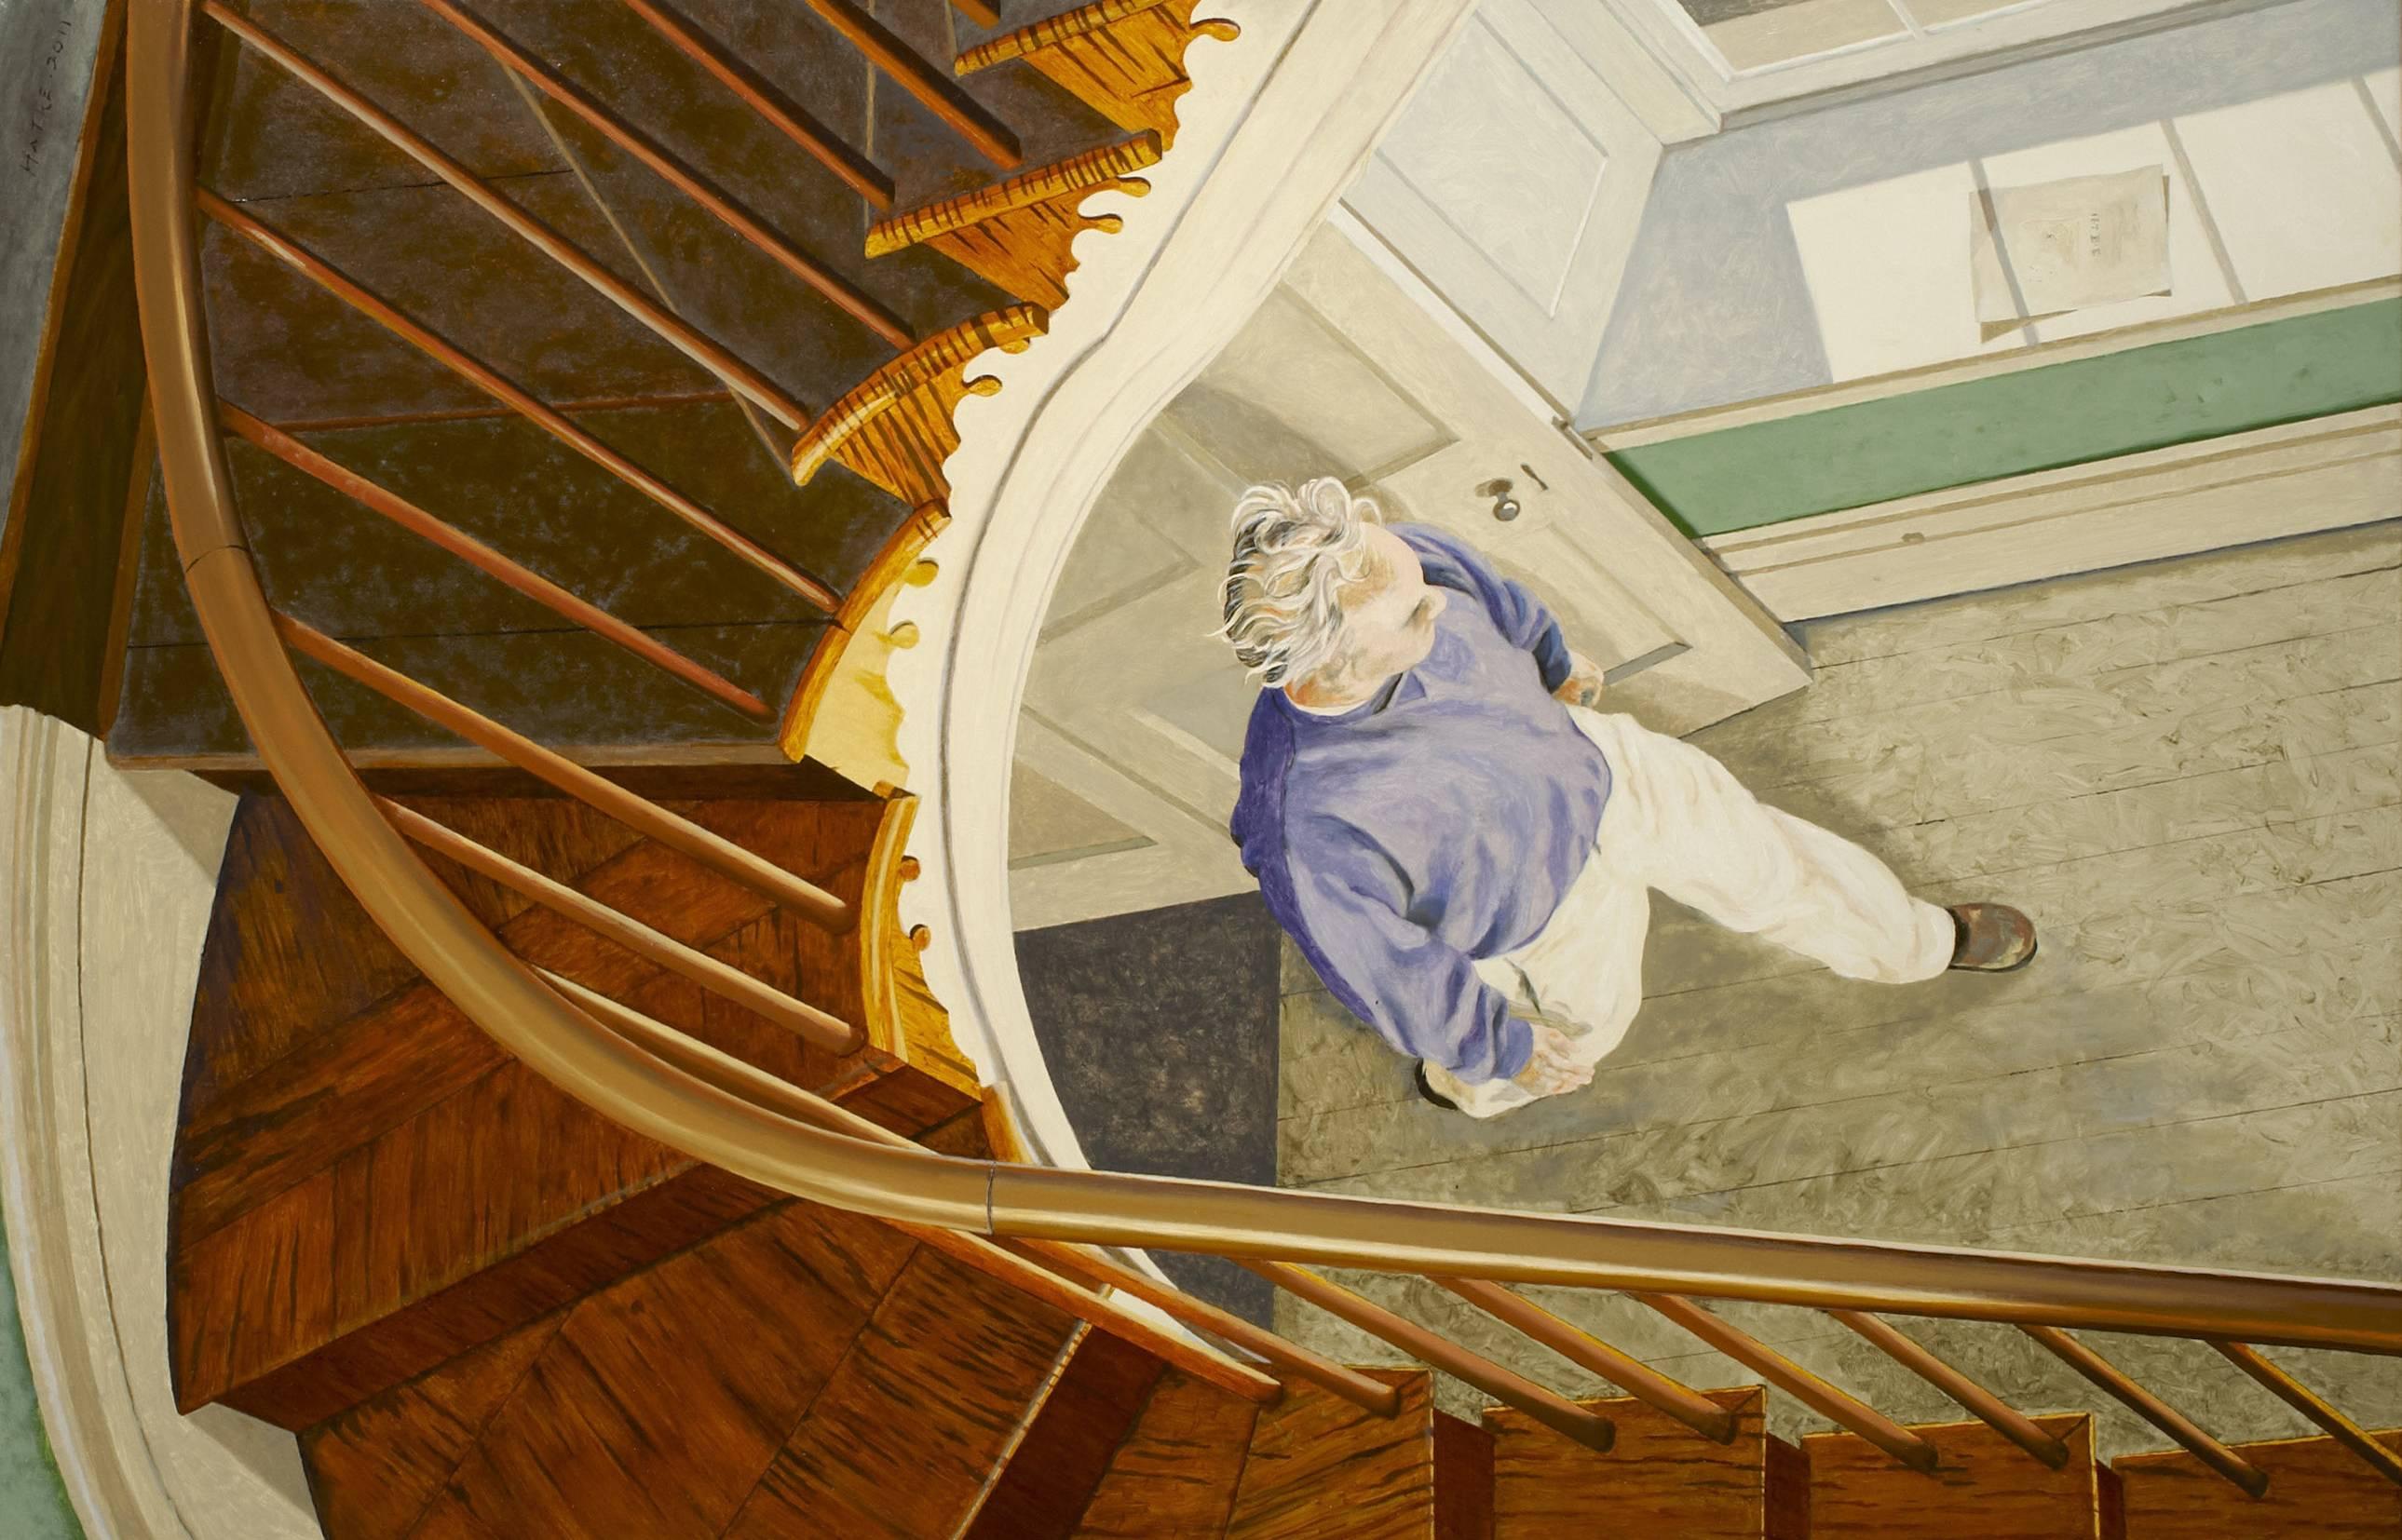 Walter Hatke Figurative Painting - SAINT FRANCIS, man walking down hallway, photo-realism, grey hair, wood stairs